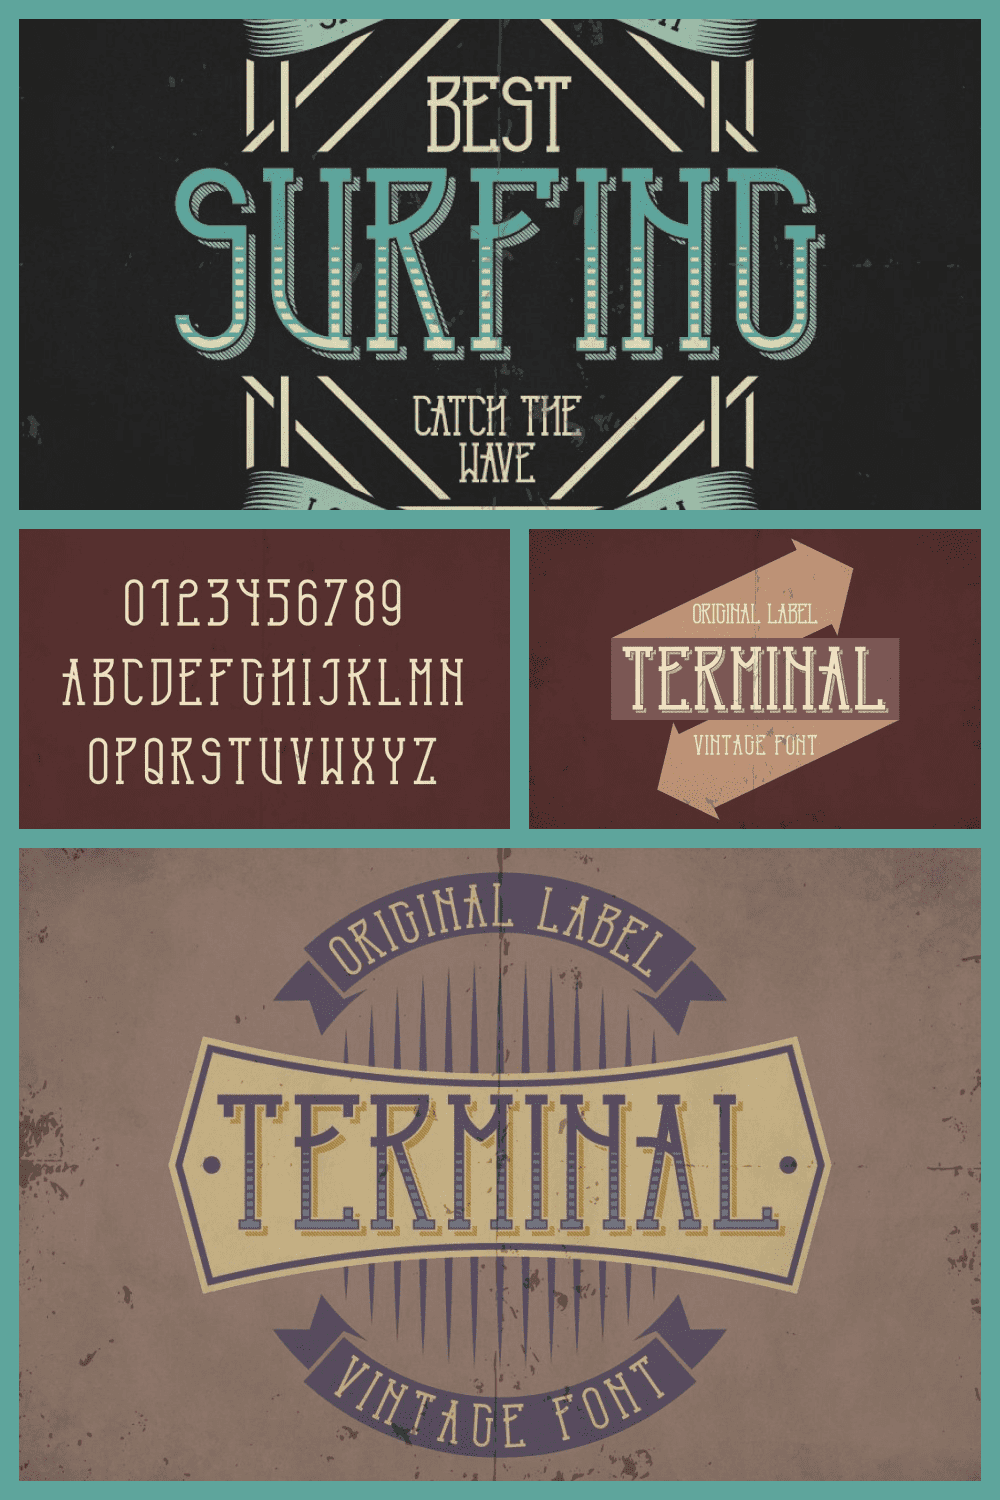 Terminal Retro Typeface - MasterBundles - Pinterest Collage Image.